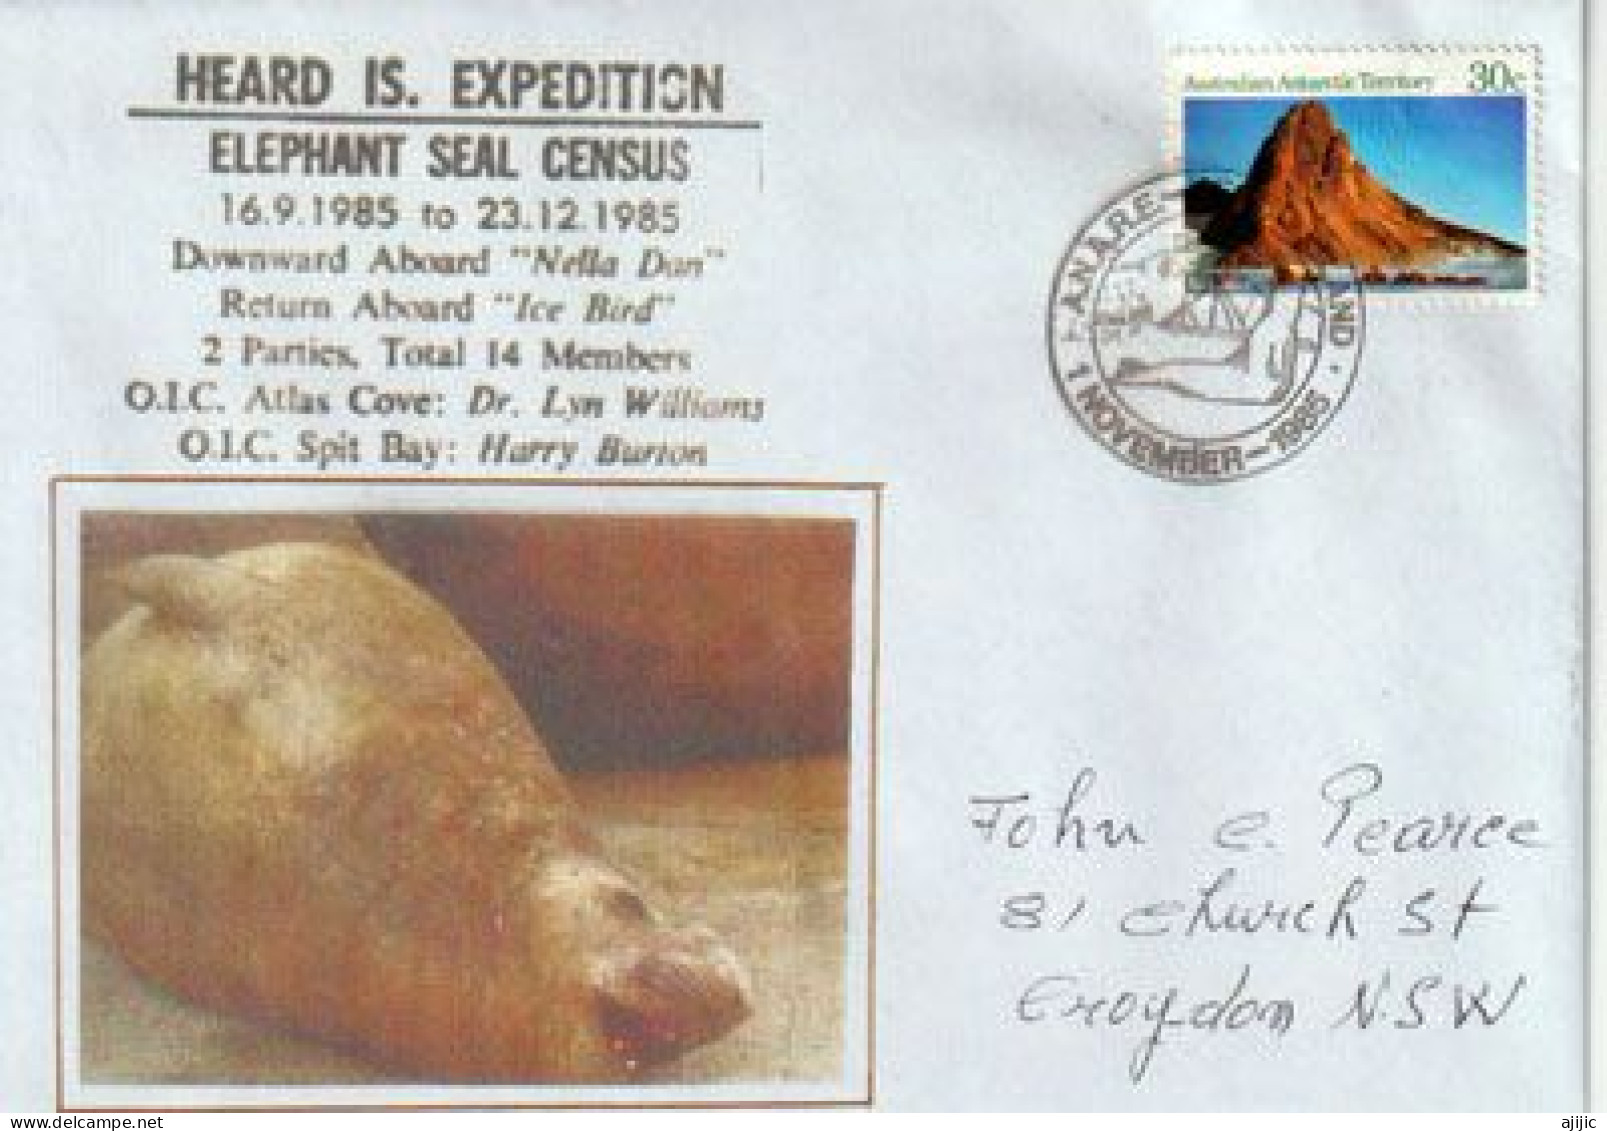 Heard Island Expedition 1985 (Elephant Seal Census), With German Ship MV Icebird (Hamburg), Addressed To Australia. - Covers & Documents